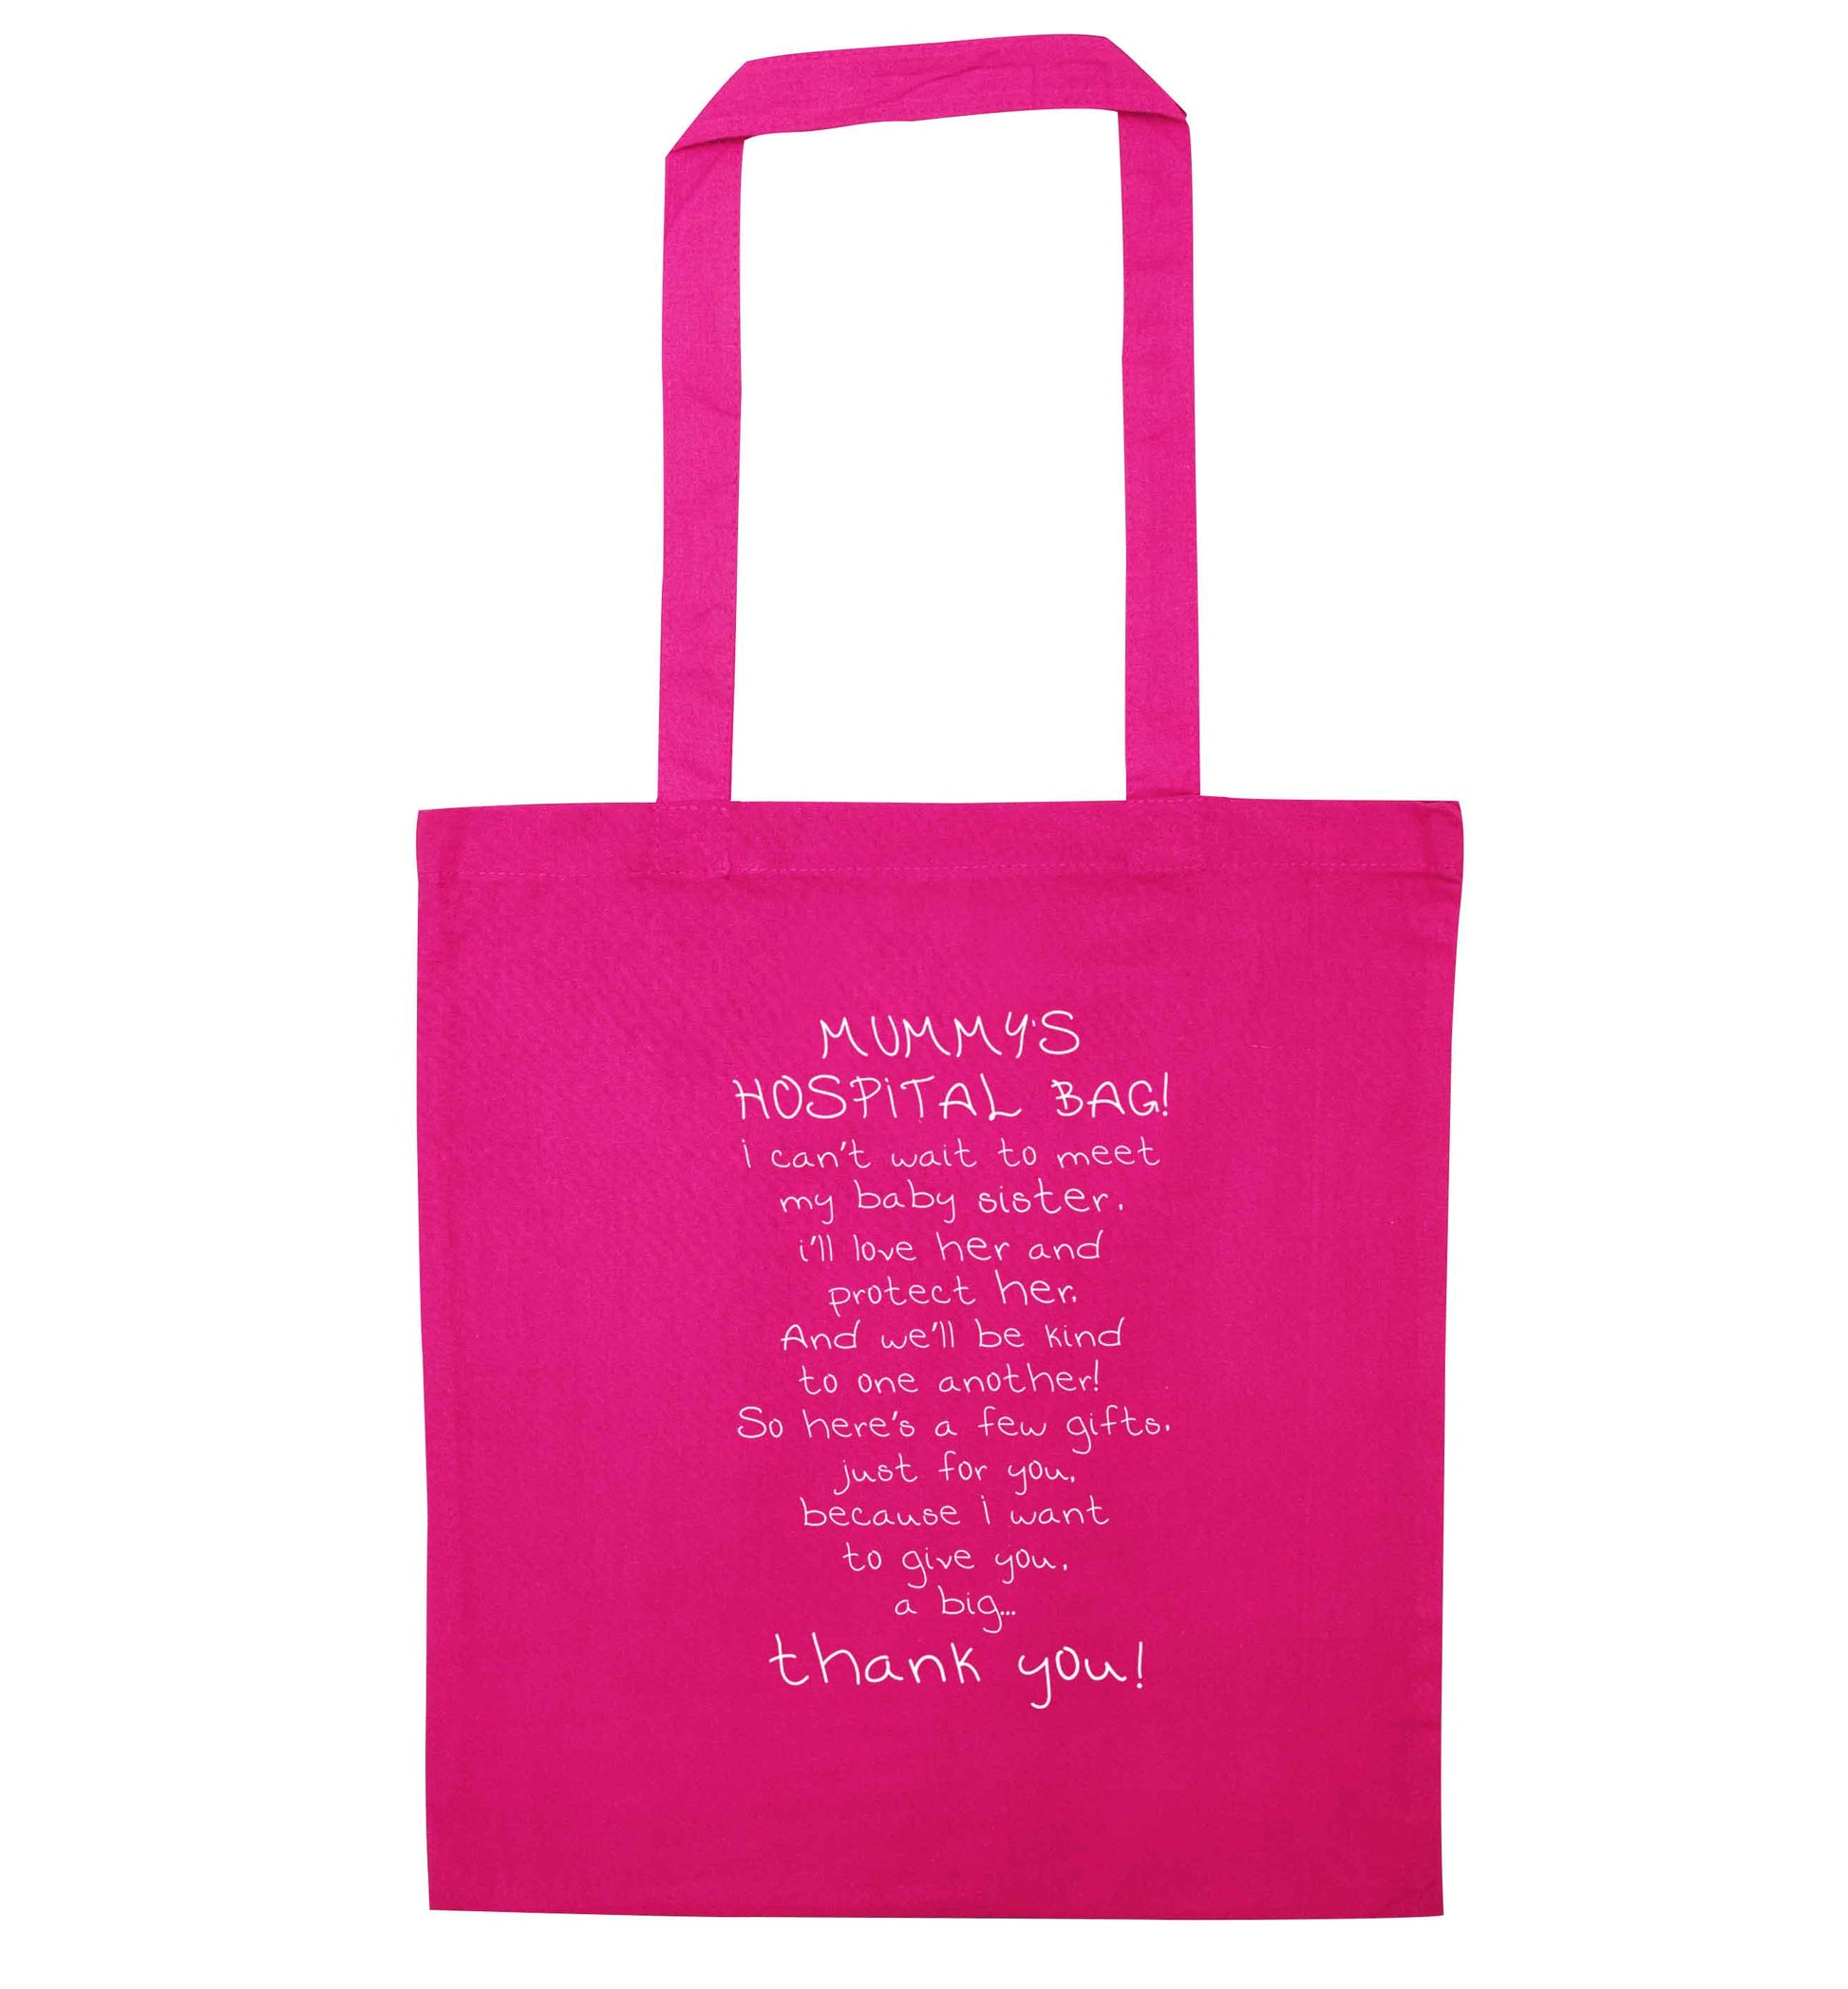 Mummy's hospital bag poem baby sister pink tote bag